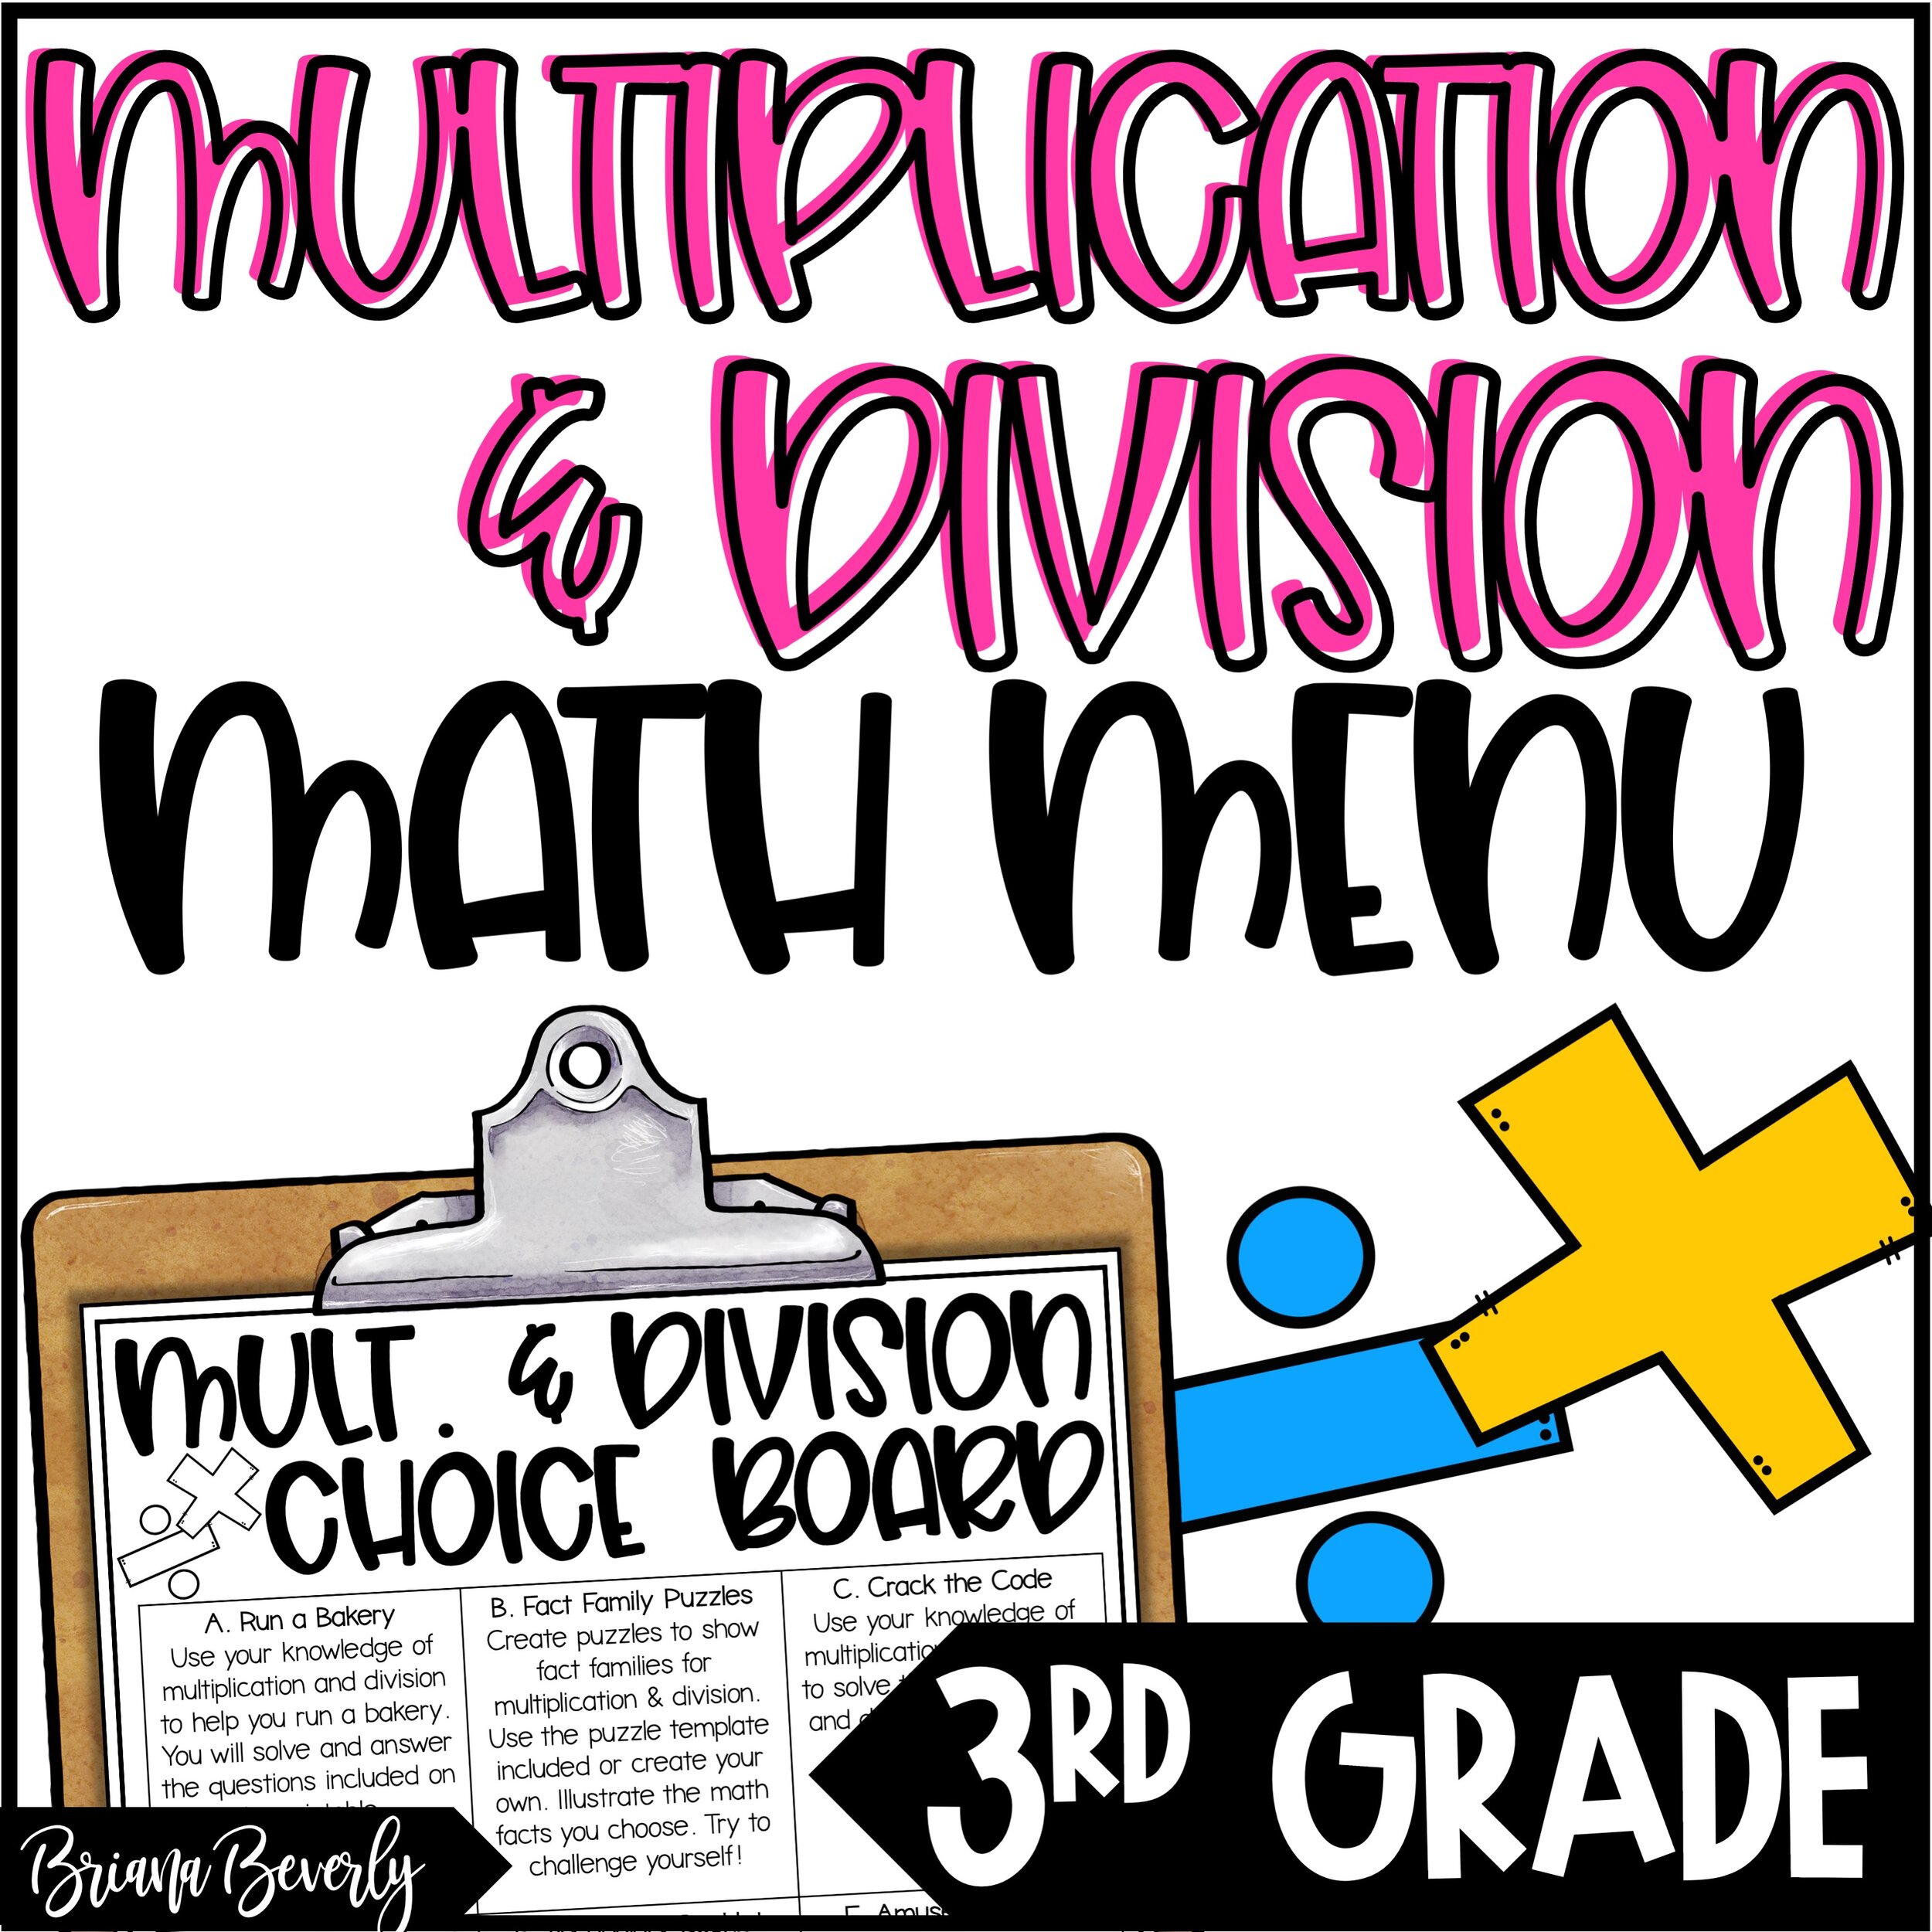 Multiplication Tic-Tac-Toe – Make Math Meaningful